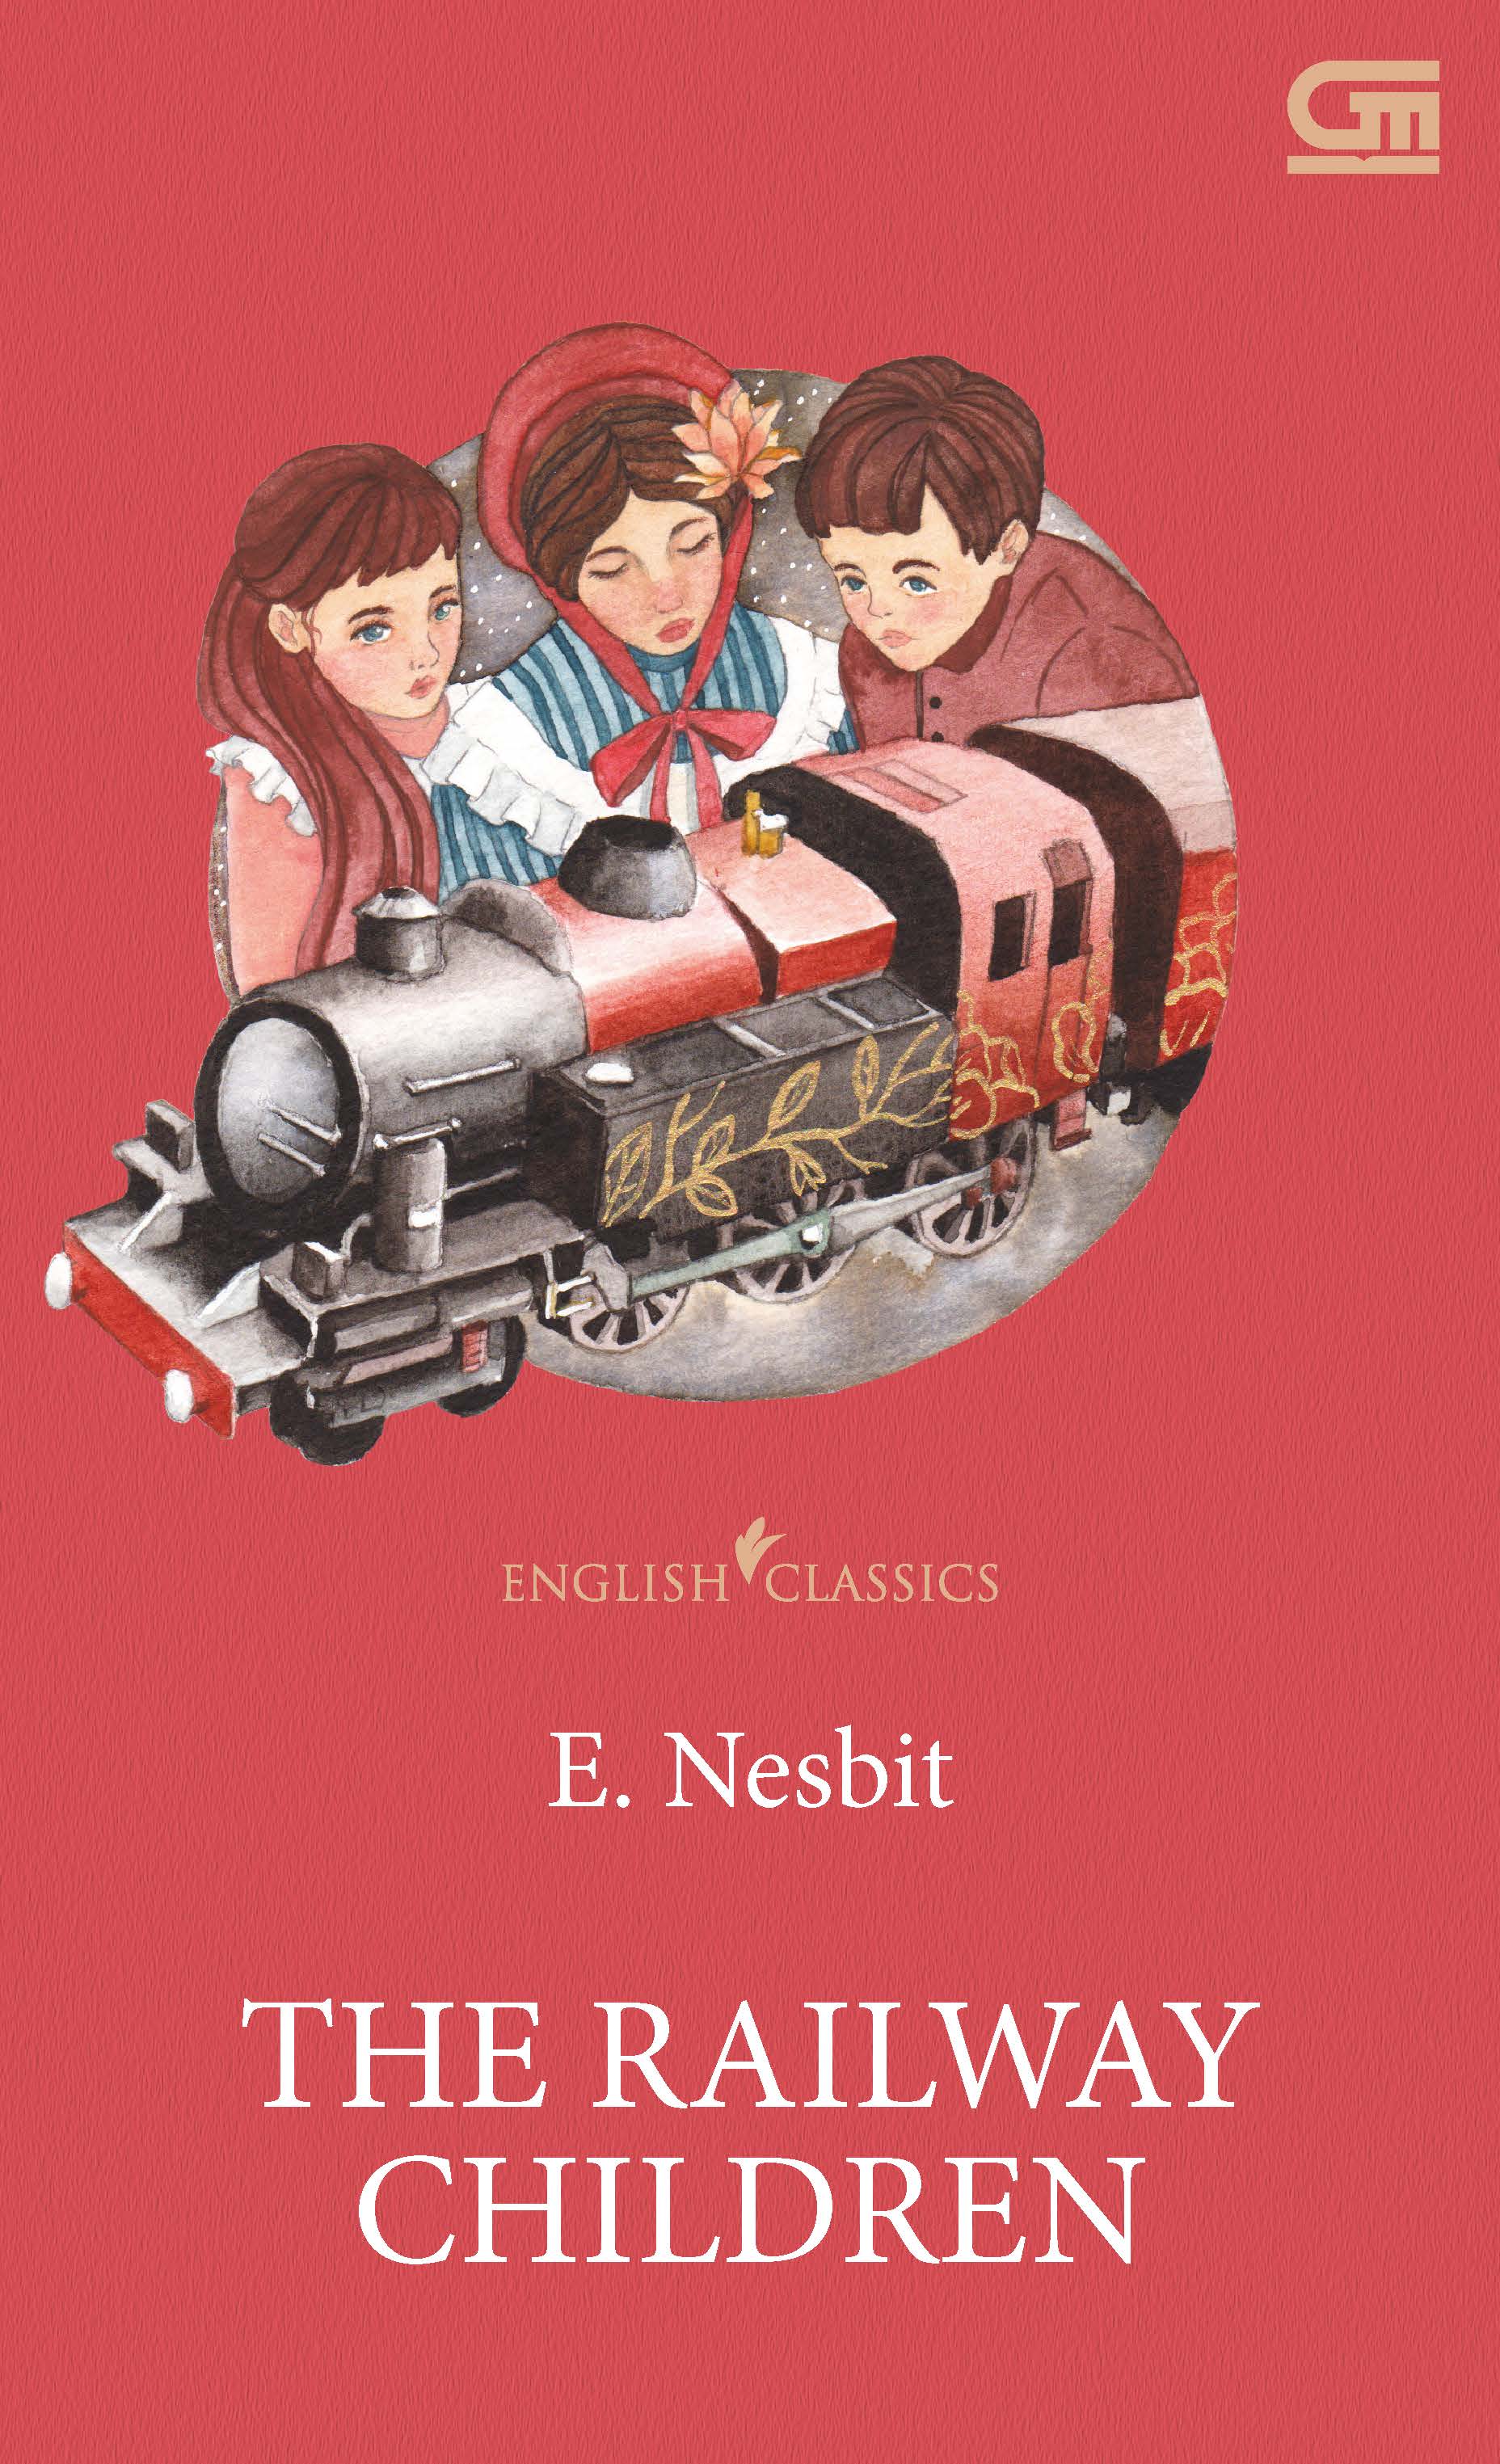 English Classics: The Railway Children